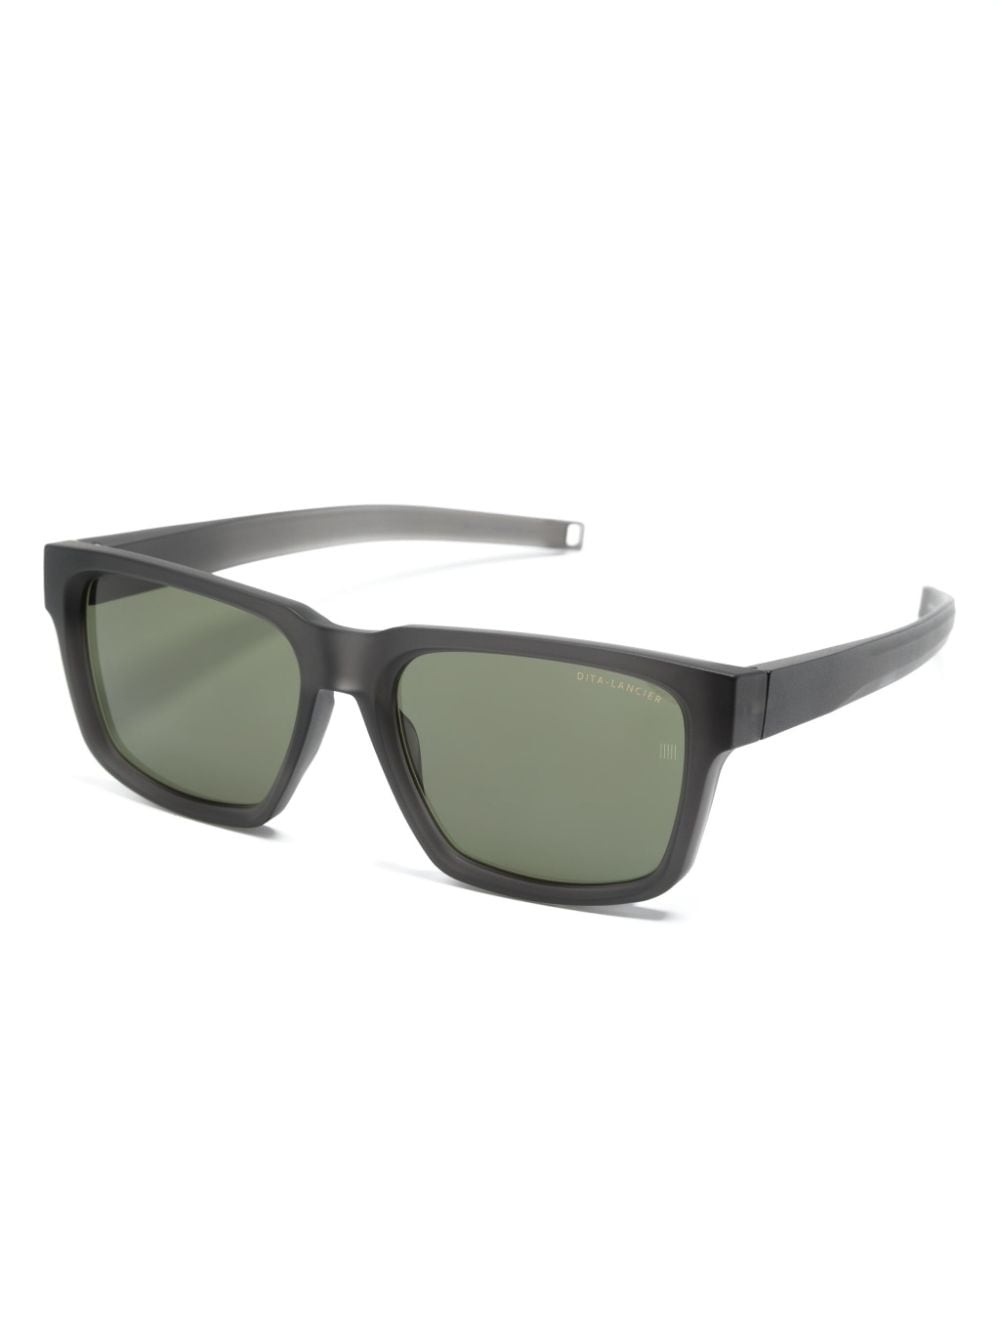 rectangle-shape sunglasses - 2